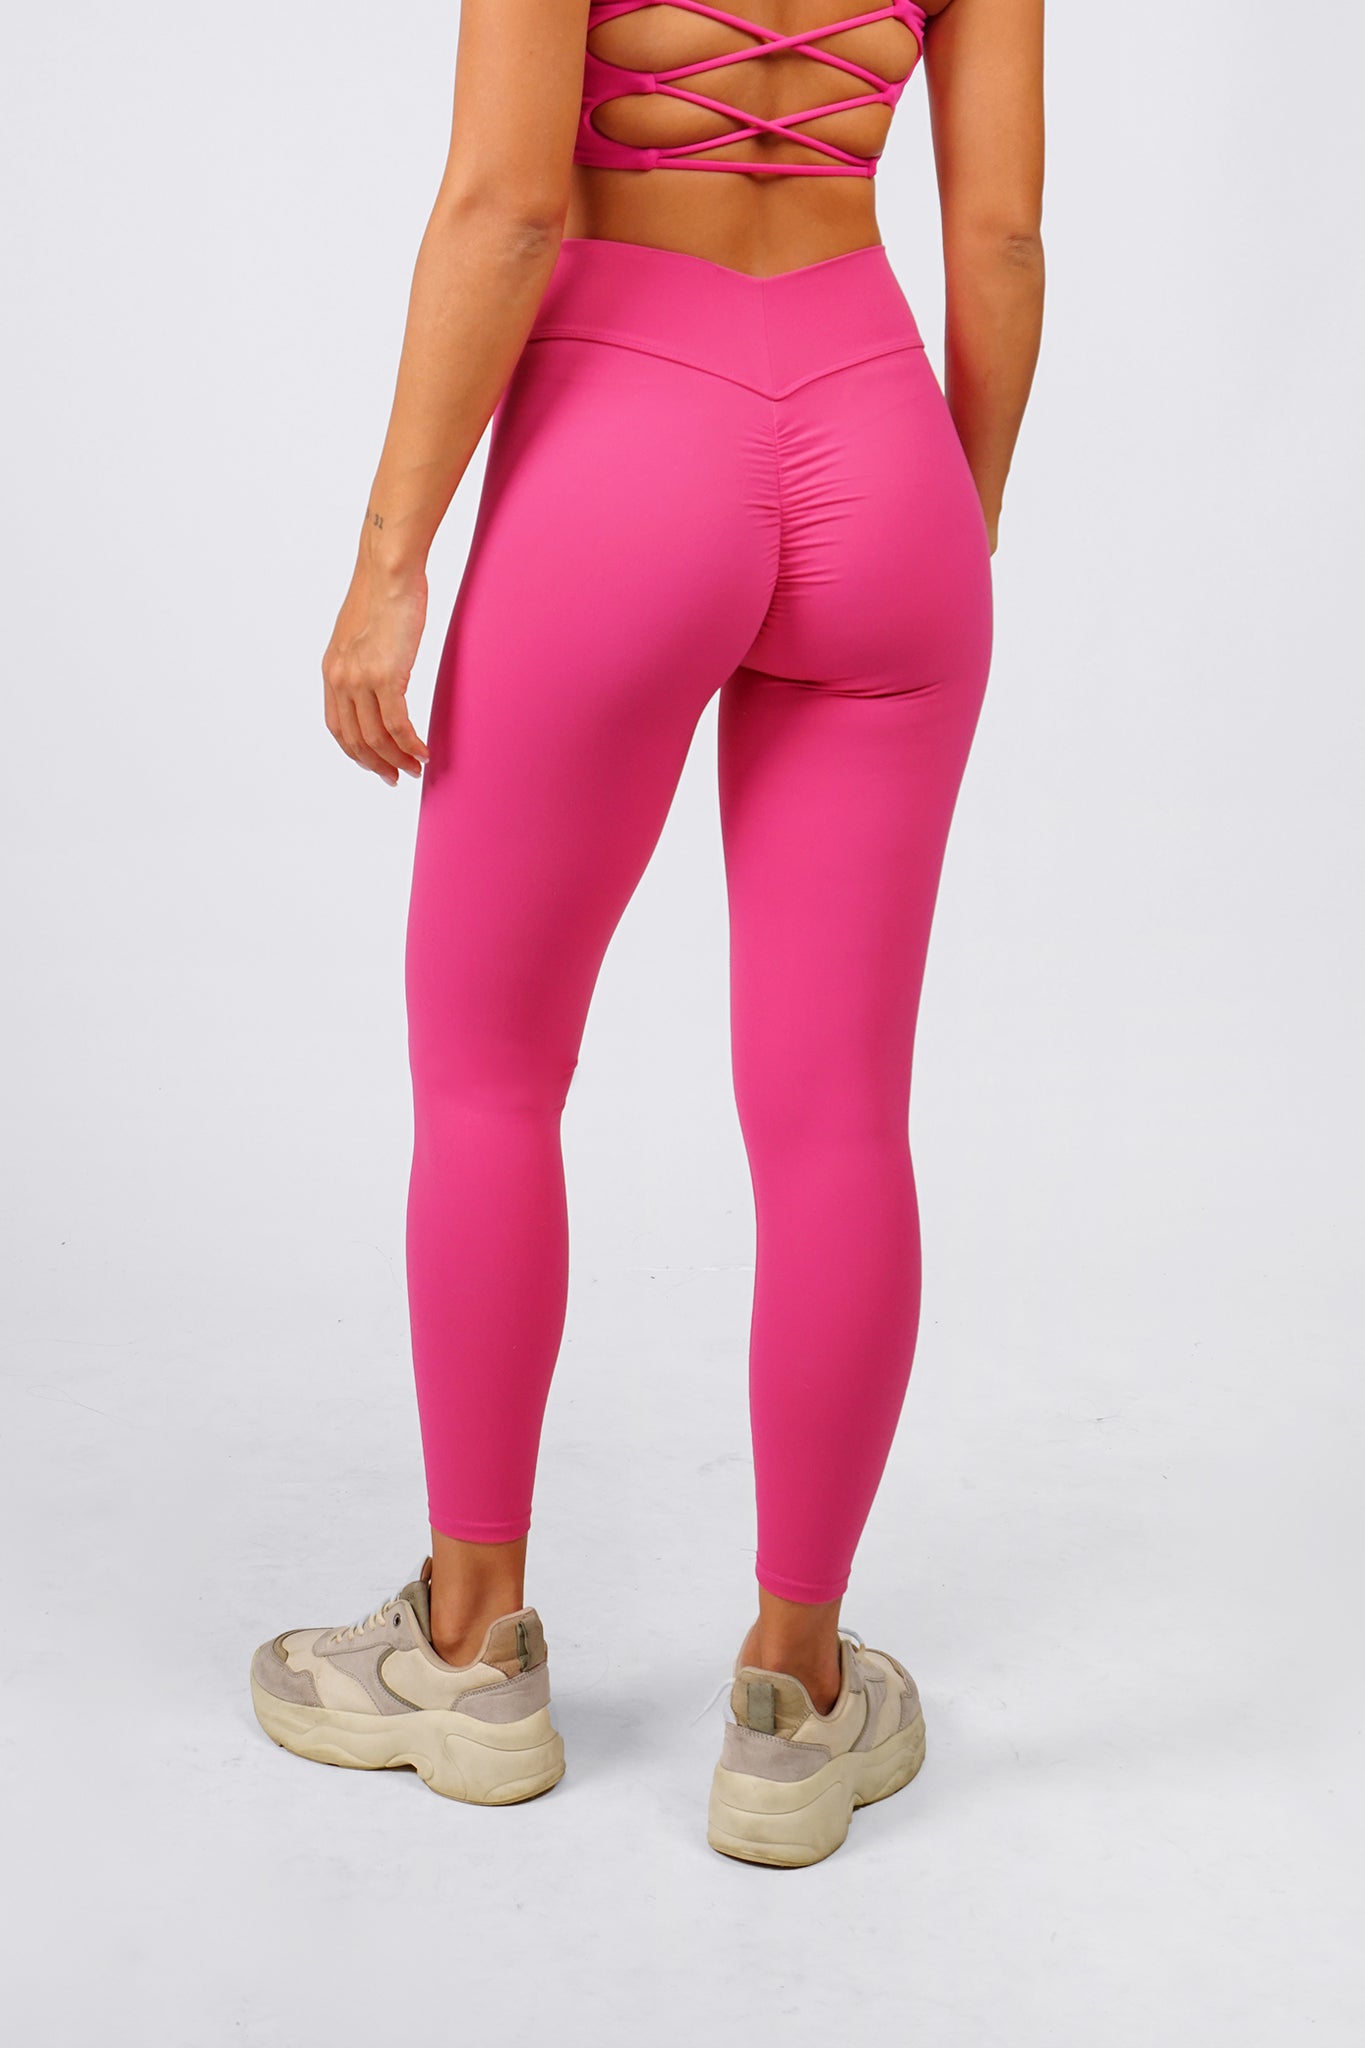 Vogo Athletica Leggings Women's Size Small Pink Stripe Stretch Capri - $13  - From Teresa